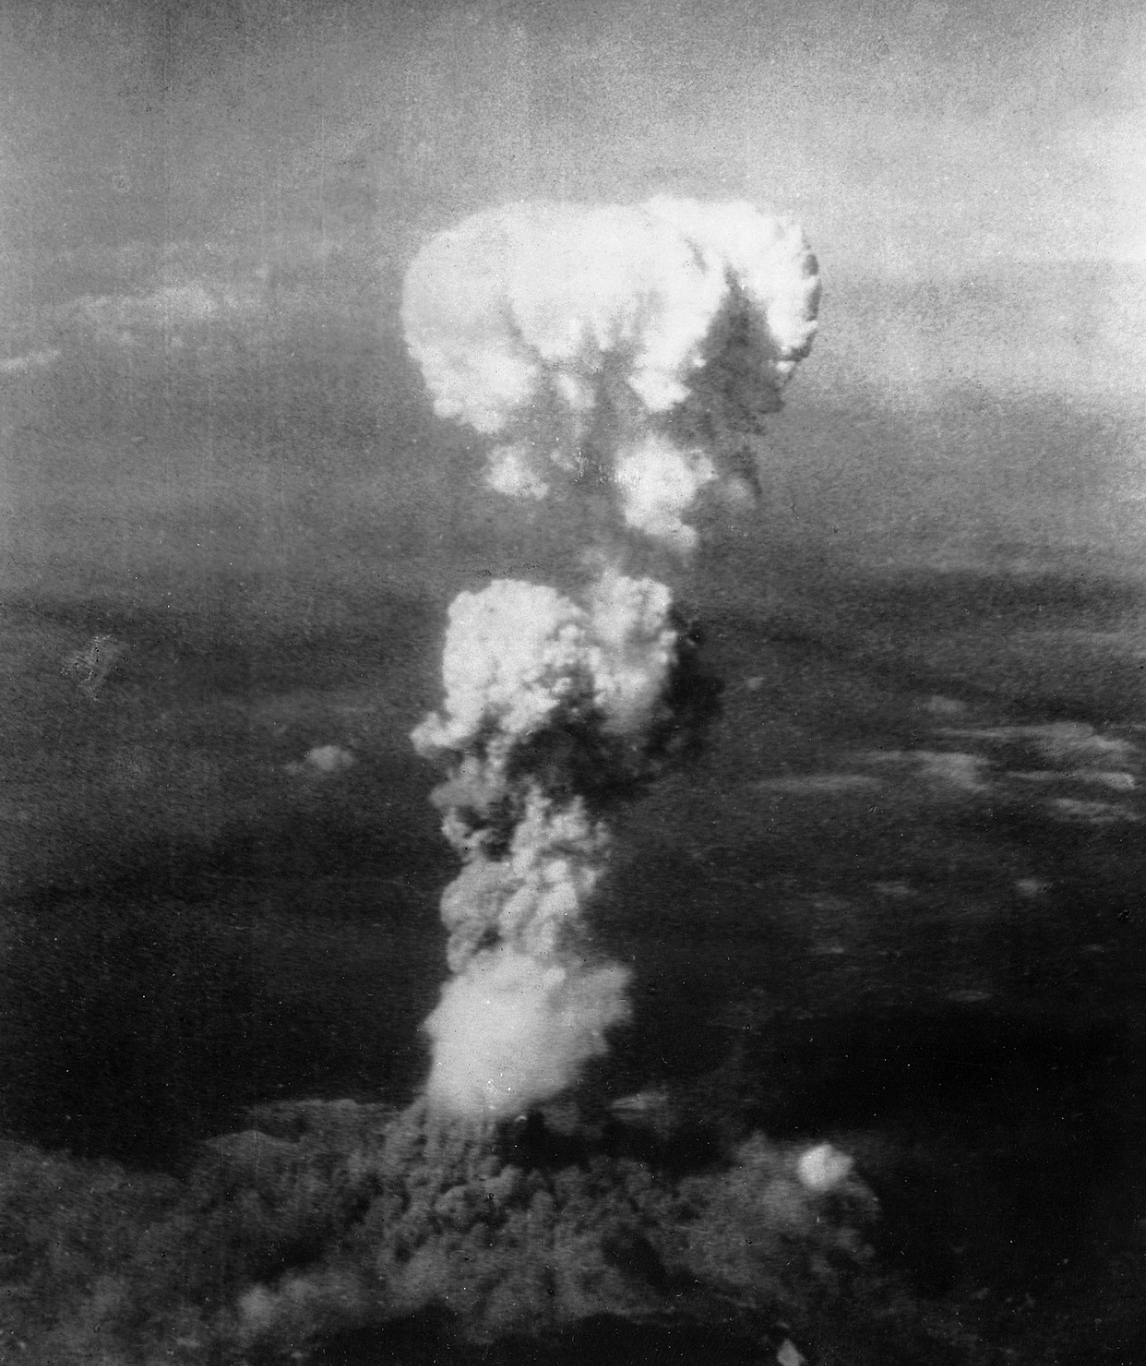 Human Bone Fragment Reveals Radiation Exposure From Hiroshima Bombing